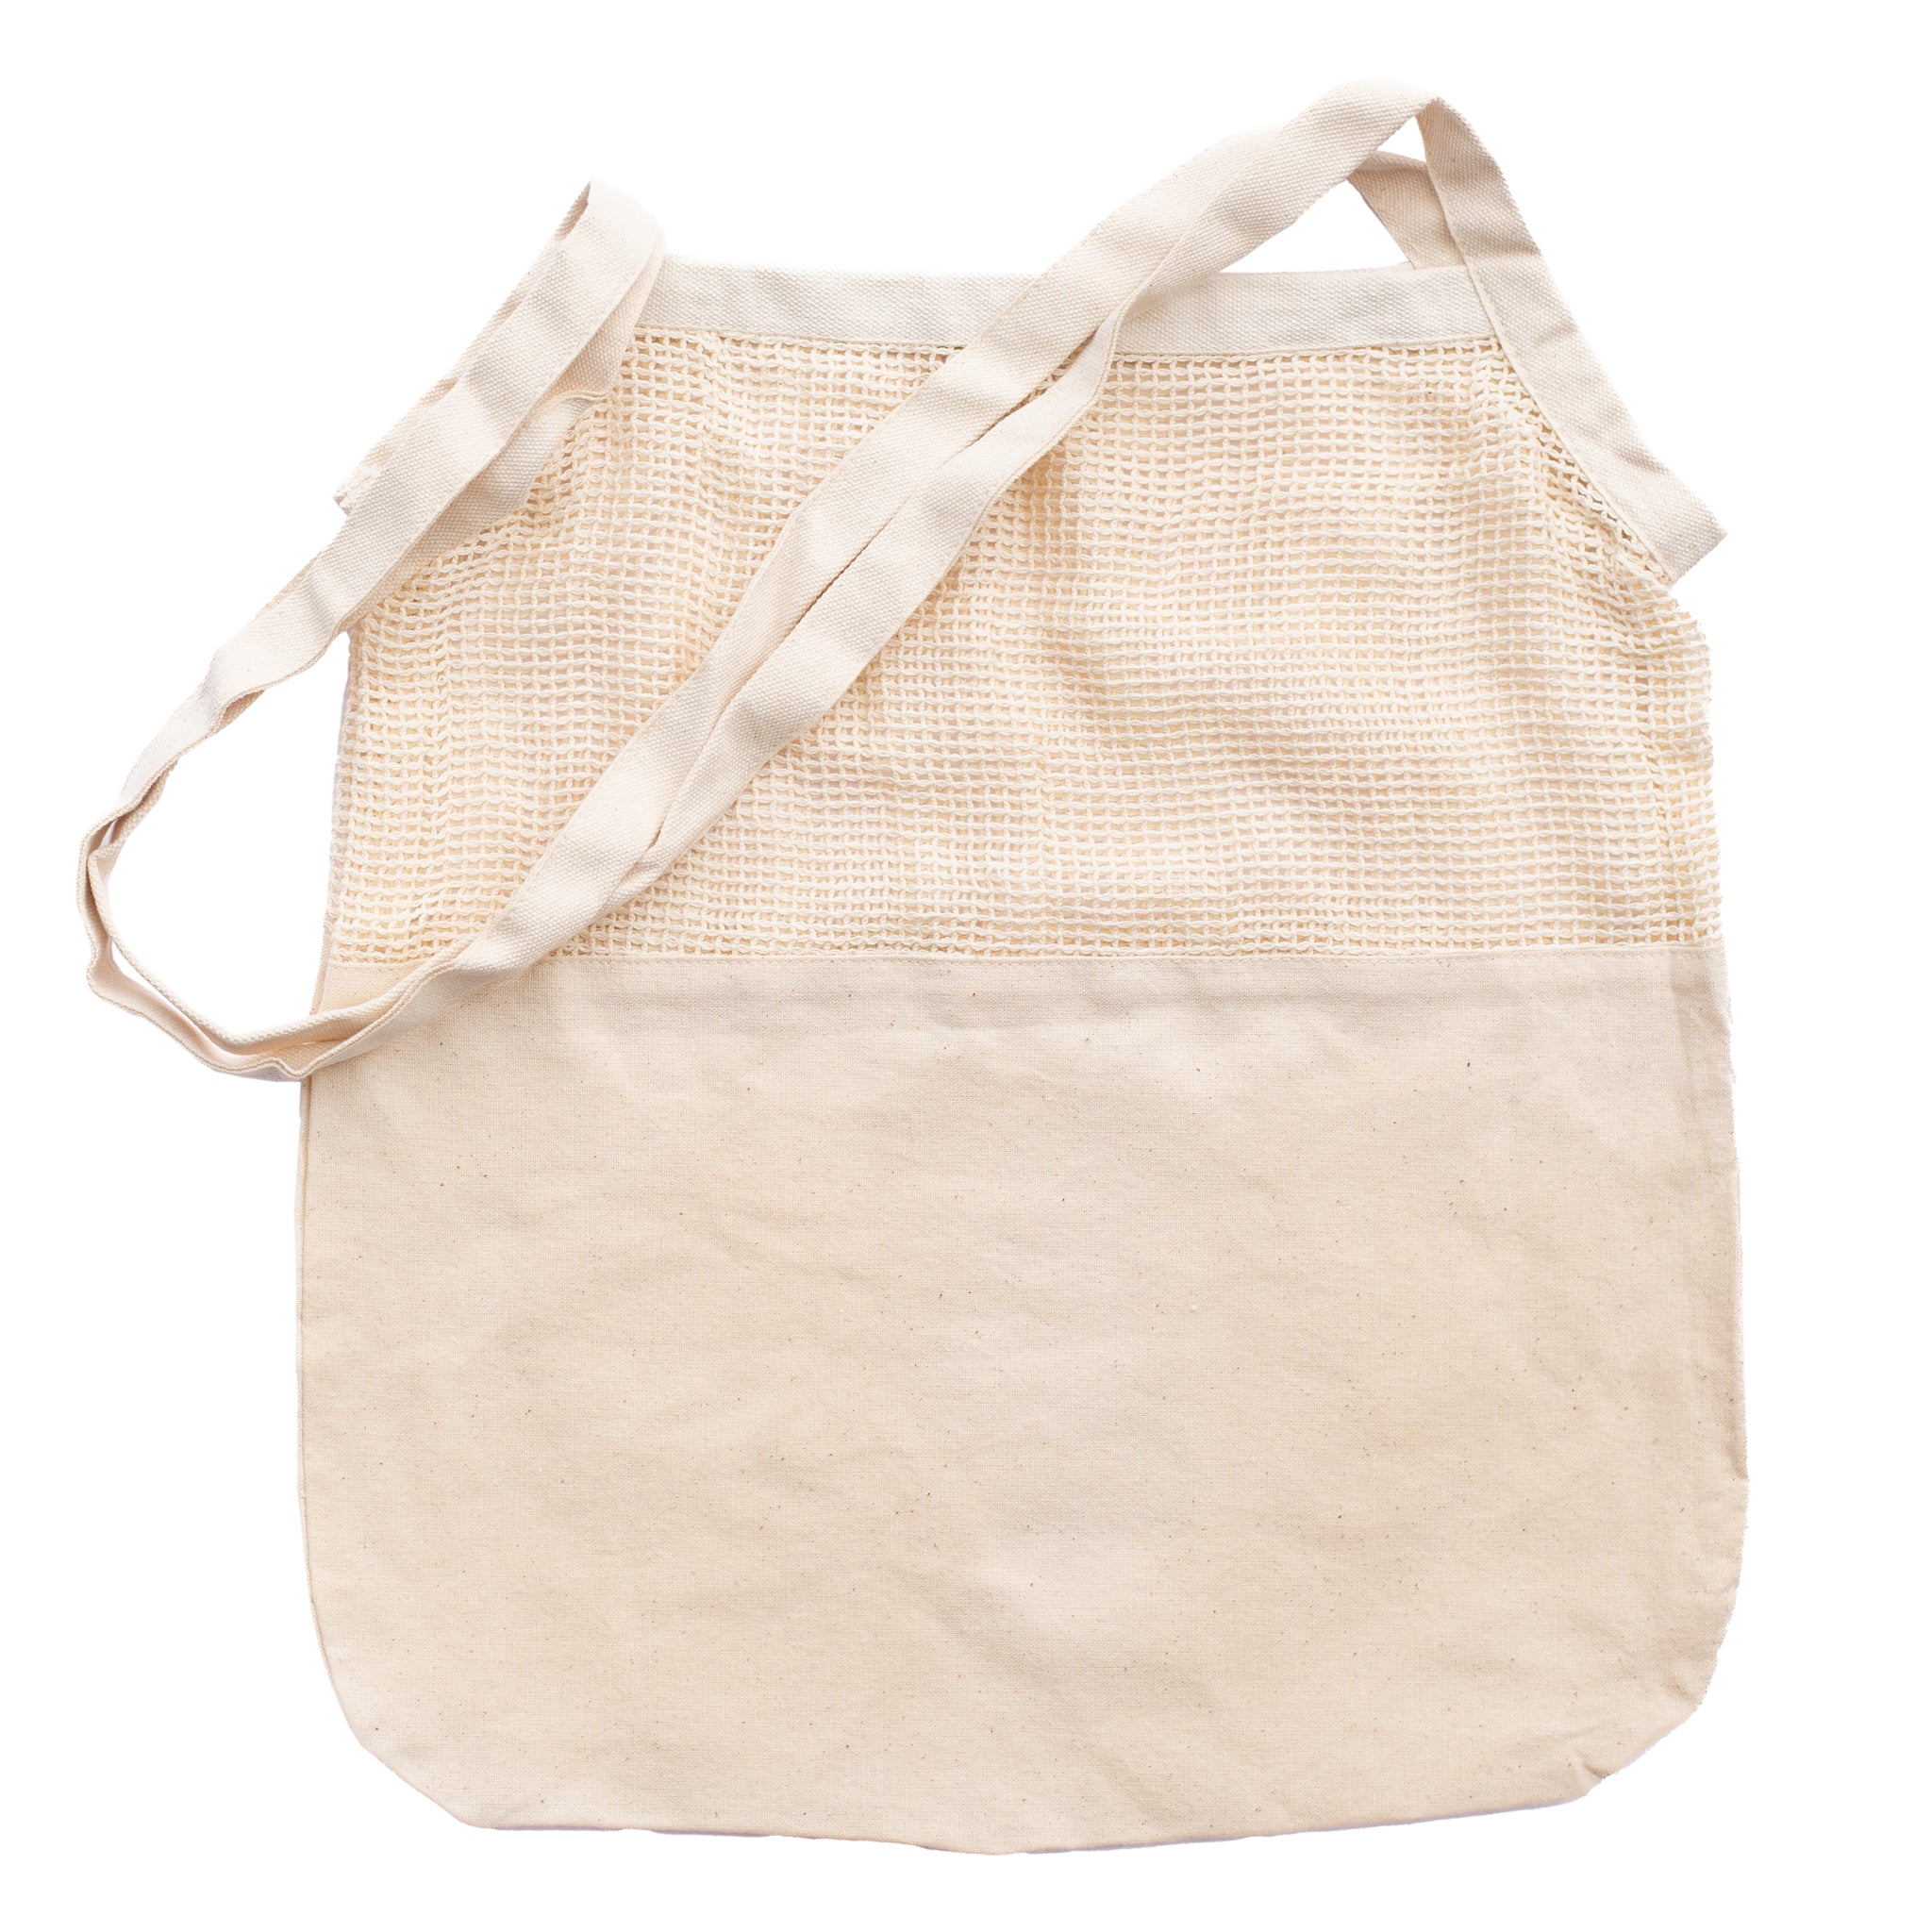 100% Natural Cotton Mesh Grocery Bag